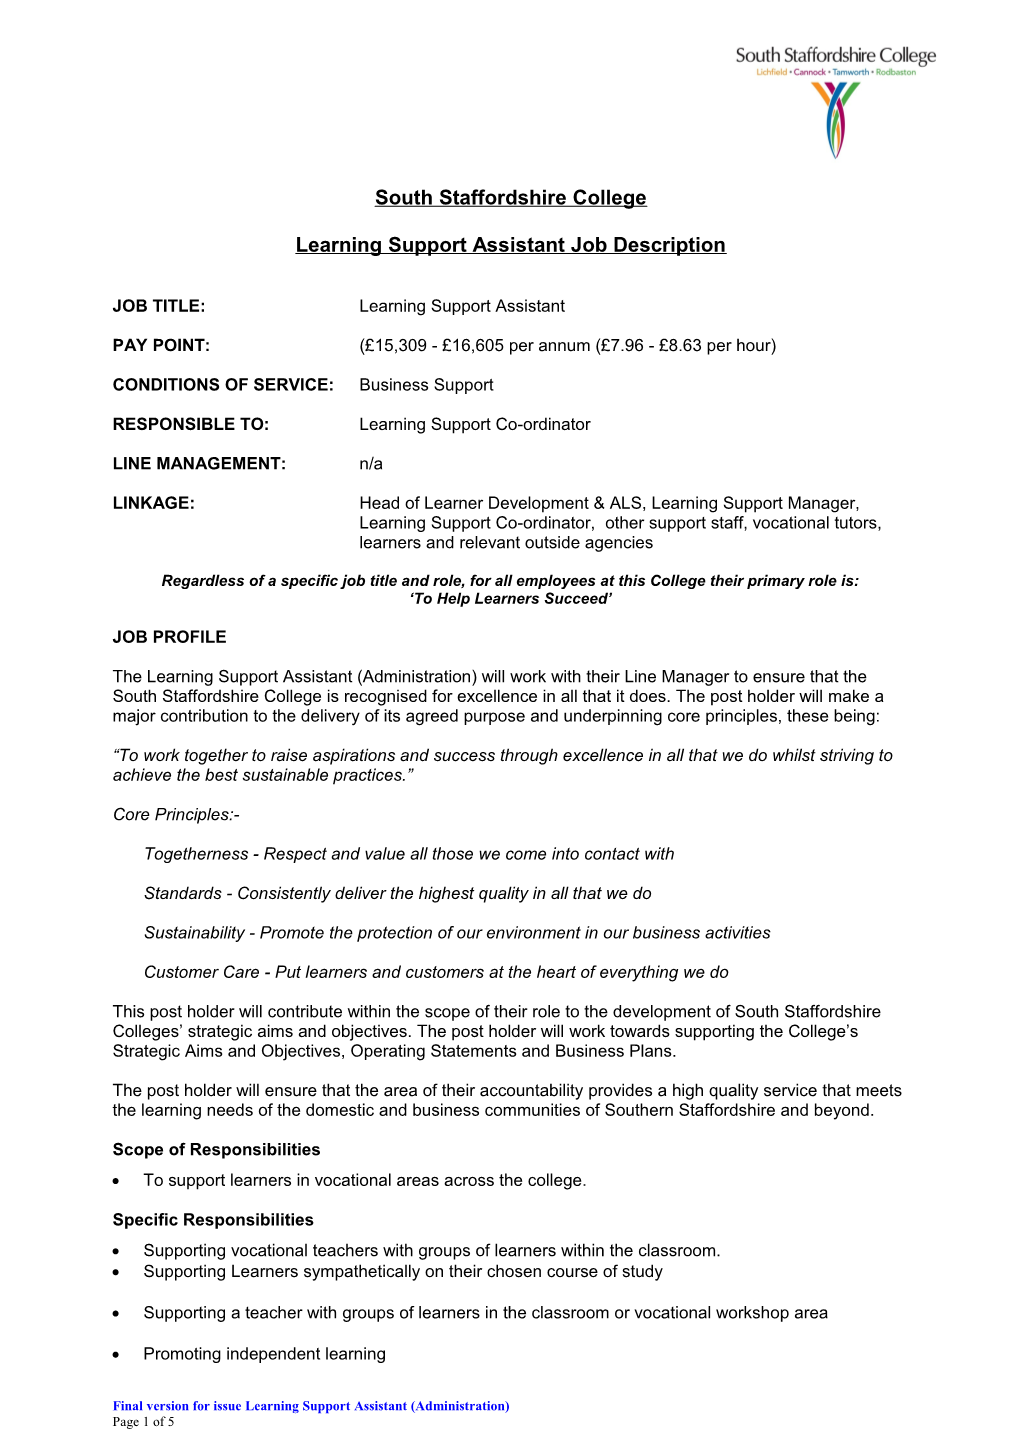 Learning Support Assistant Job Description